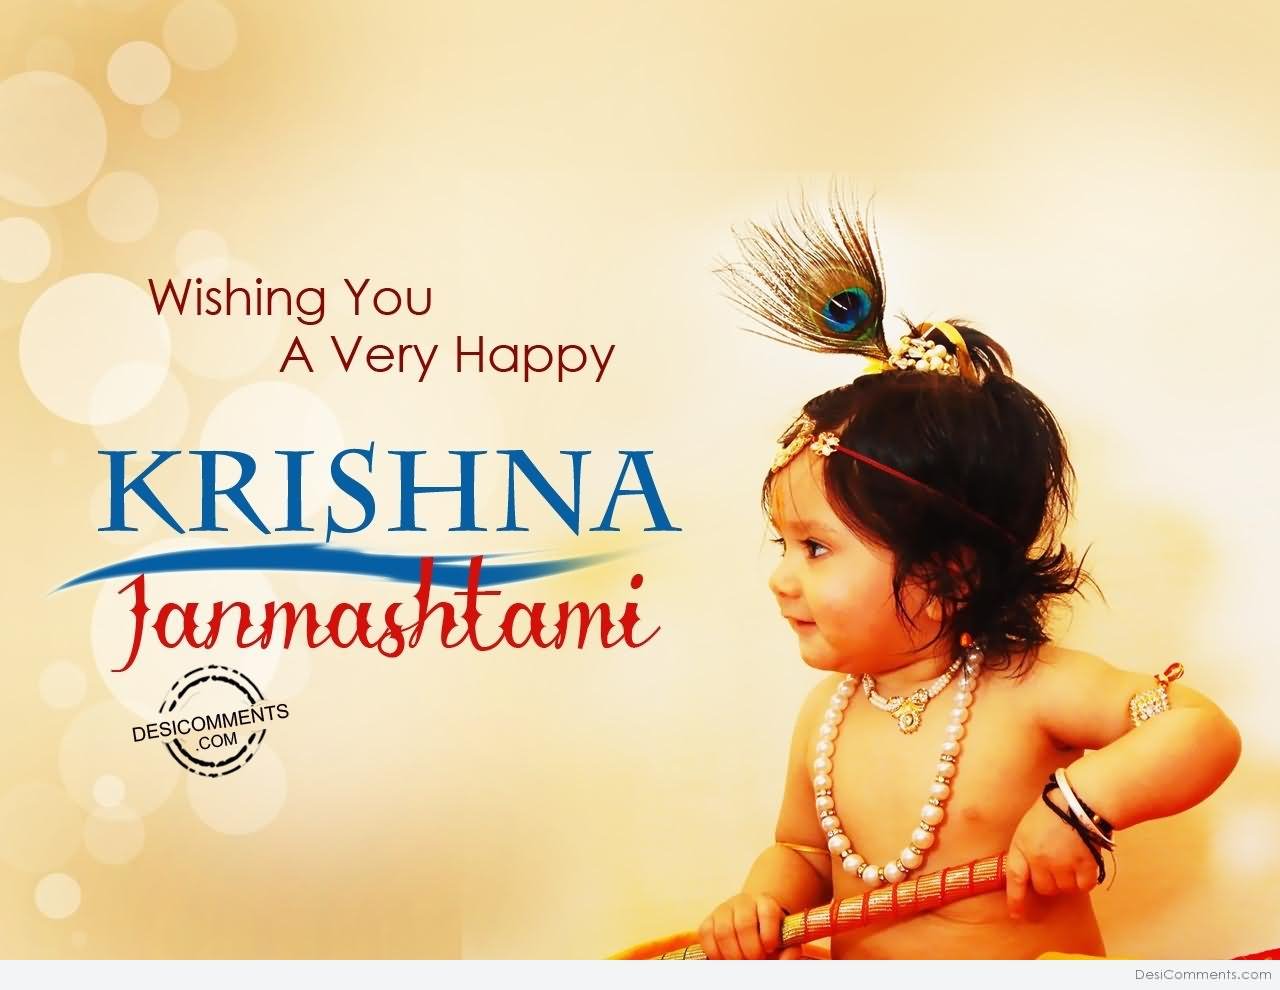 Wishing You A Very Happy Krsihna Janmashtami 2016